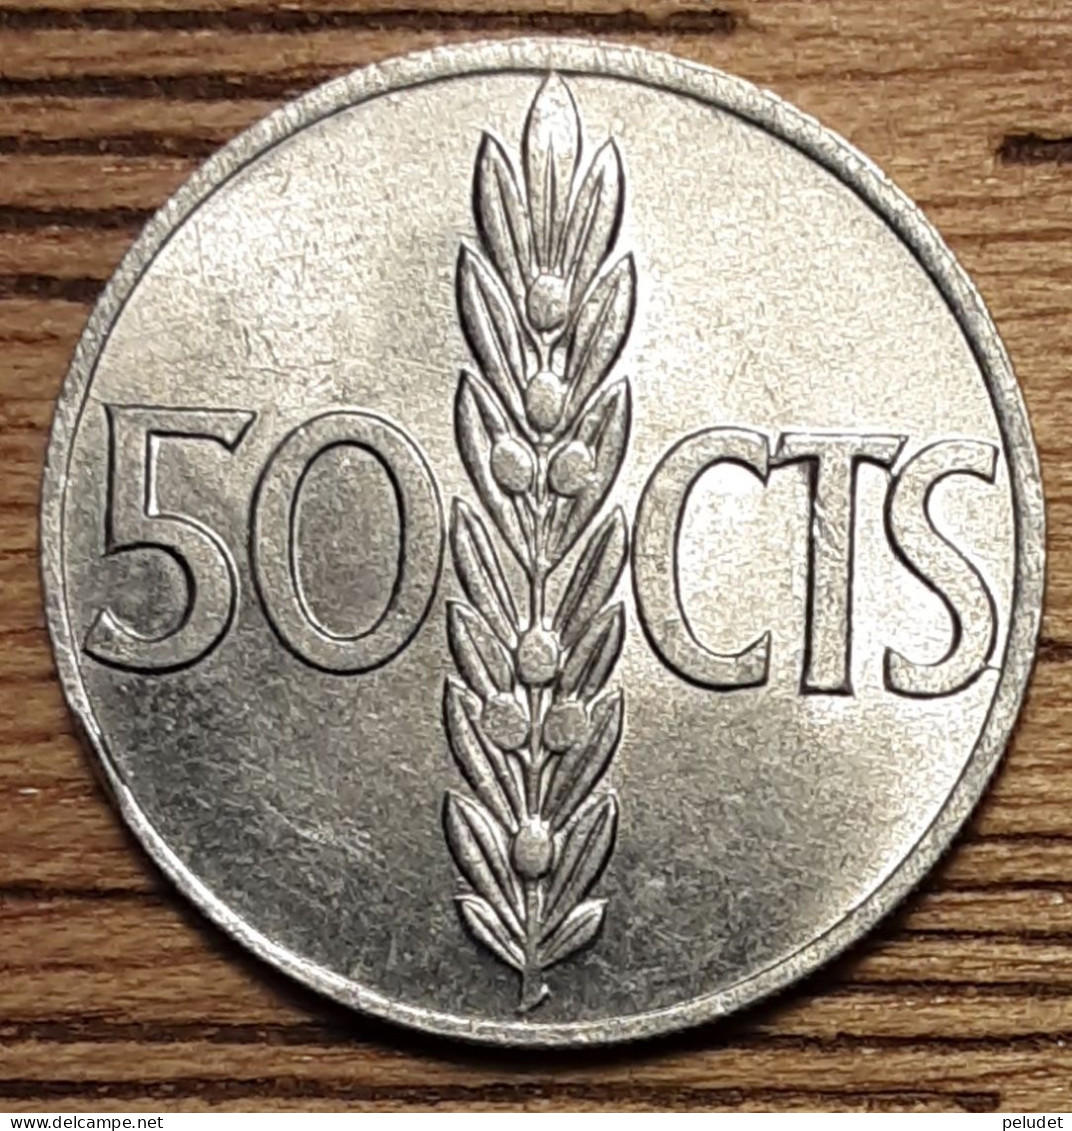 España Spain Espagne, 50 CTS CENTIMOS 1966 / 68* KM# 795 - 50 Céntimos